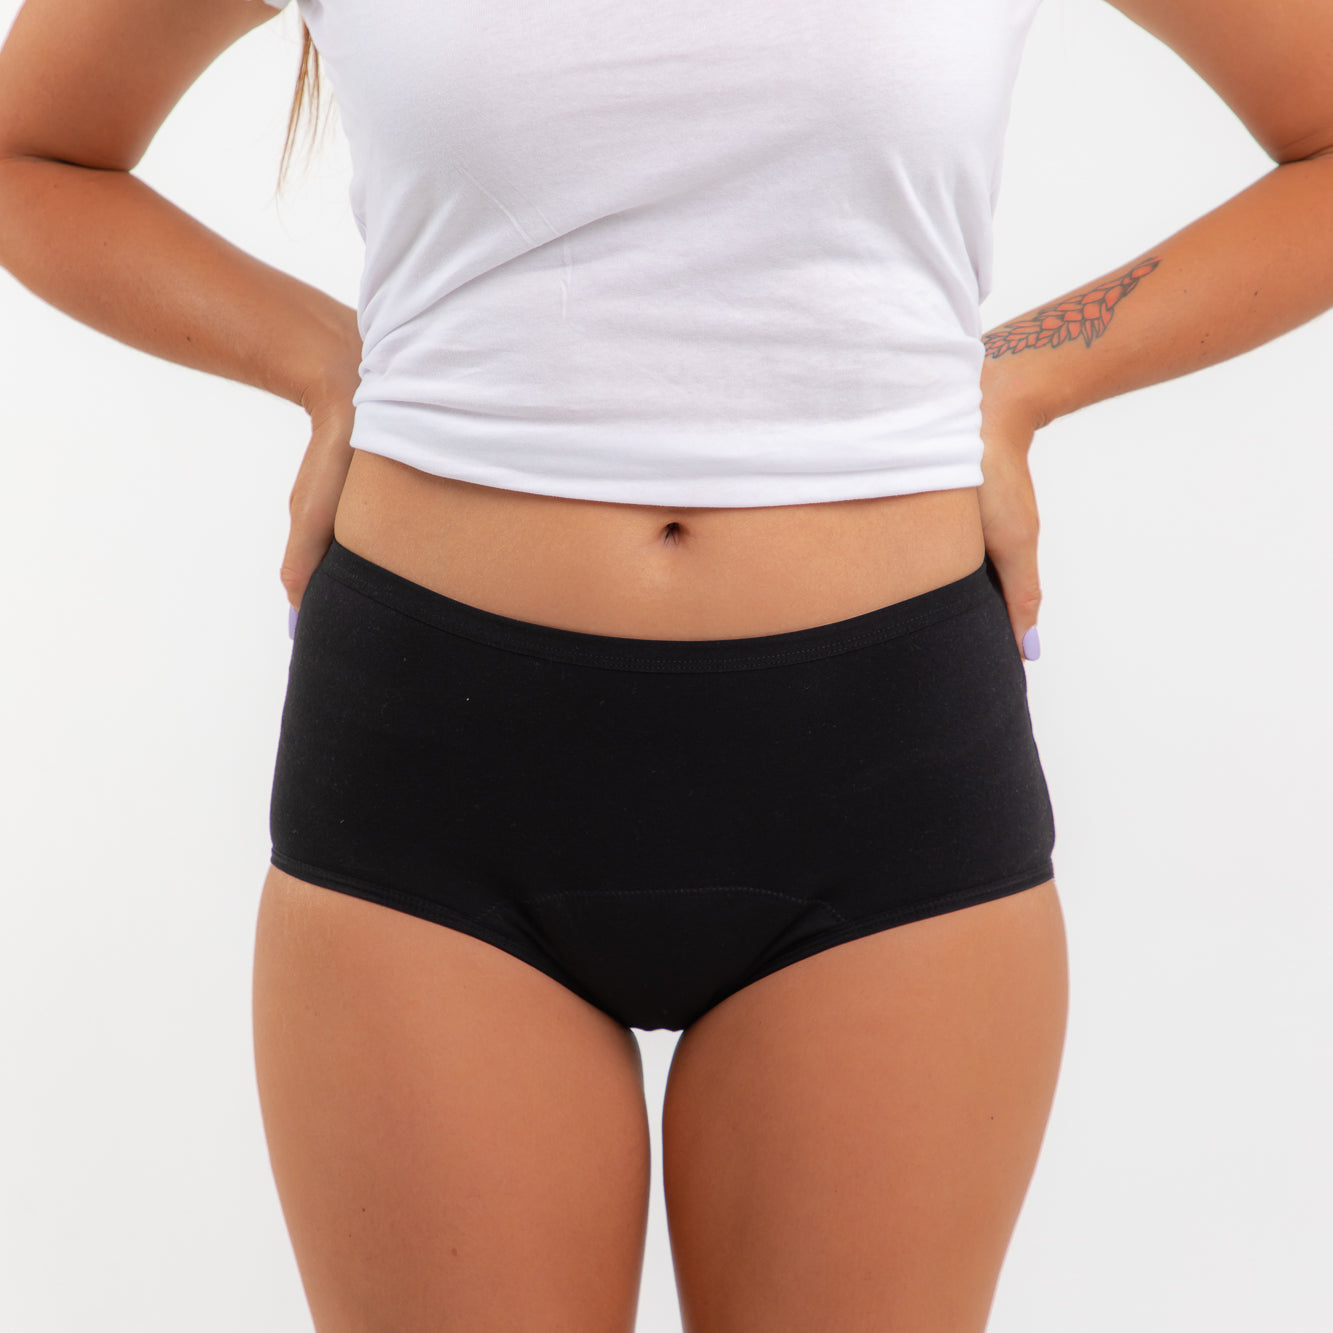 Orgaknix Super Boyleg Period Underwear Australia